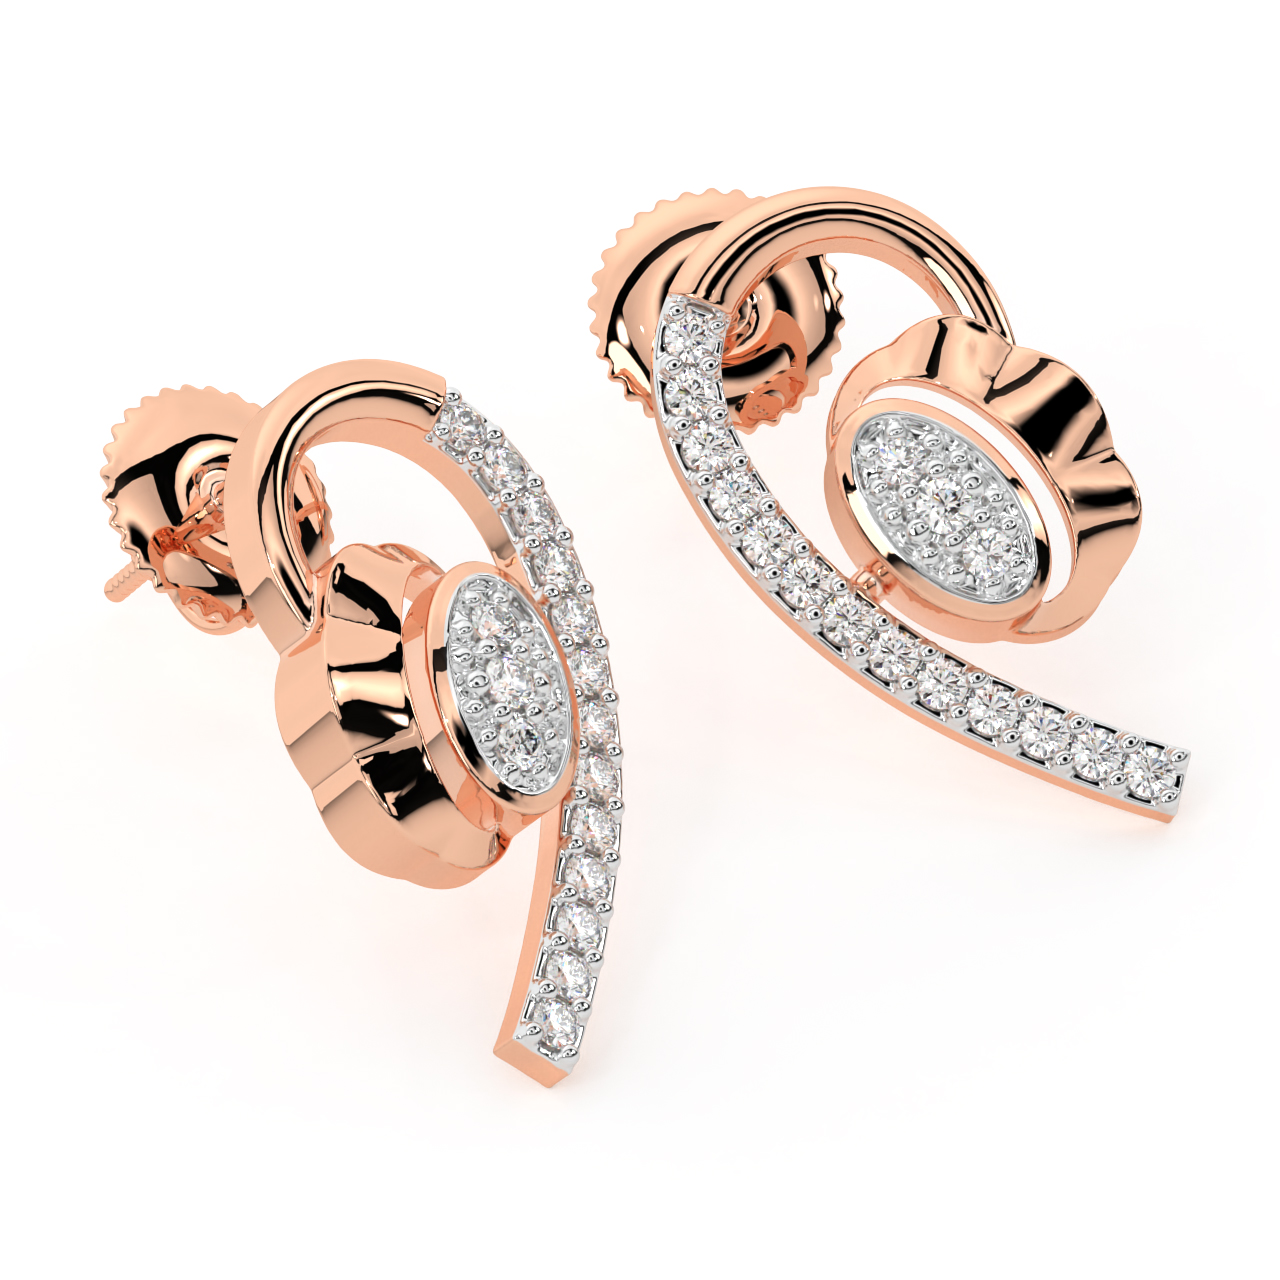 The Gorgeously Grecian Diamond Earrings